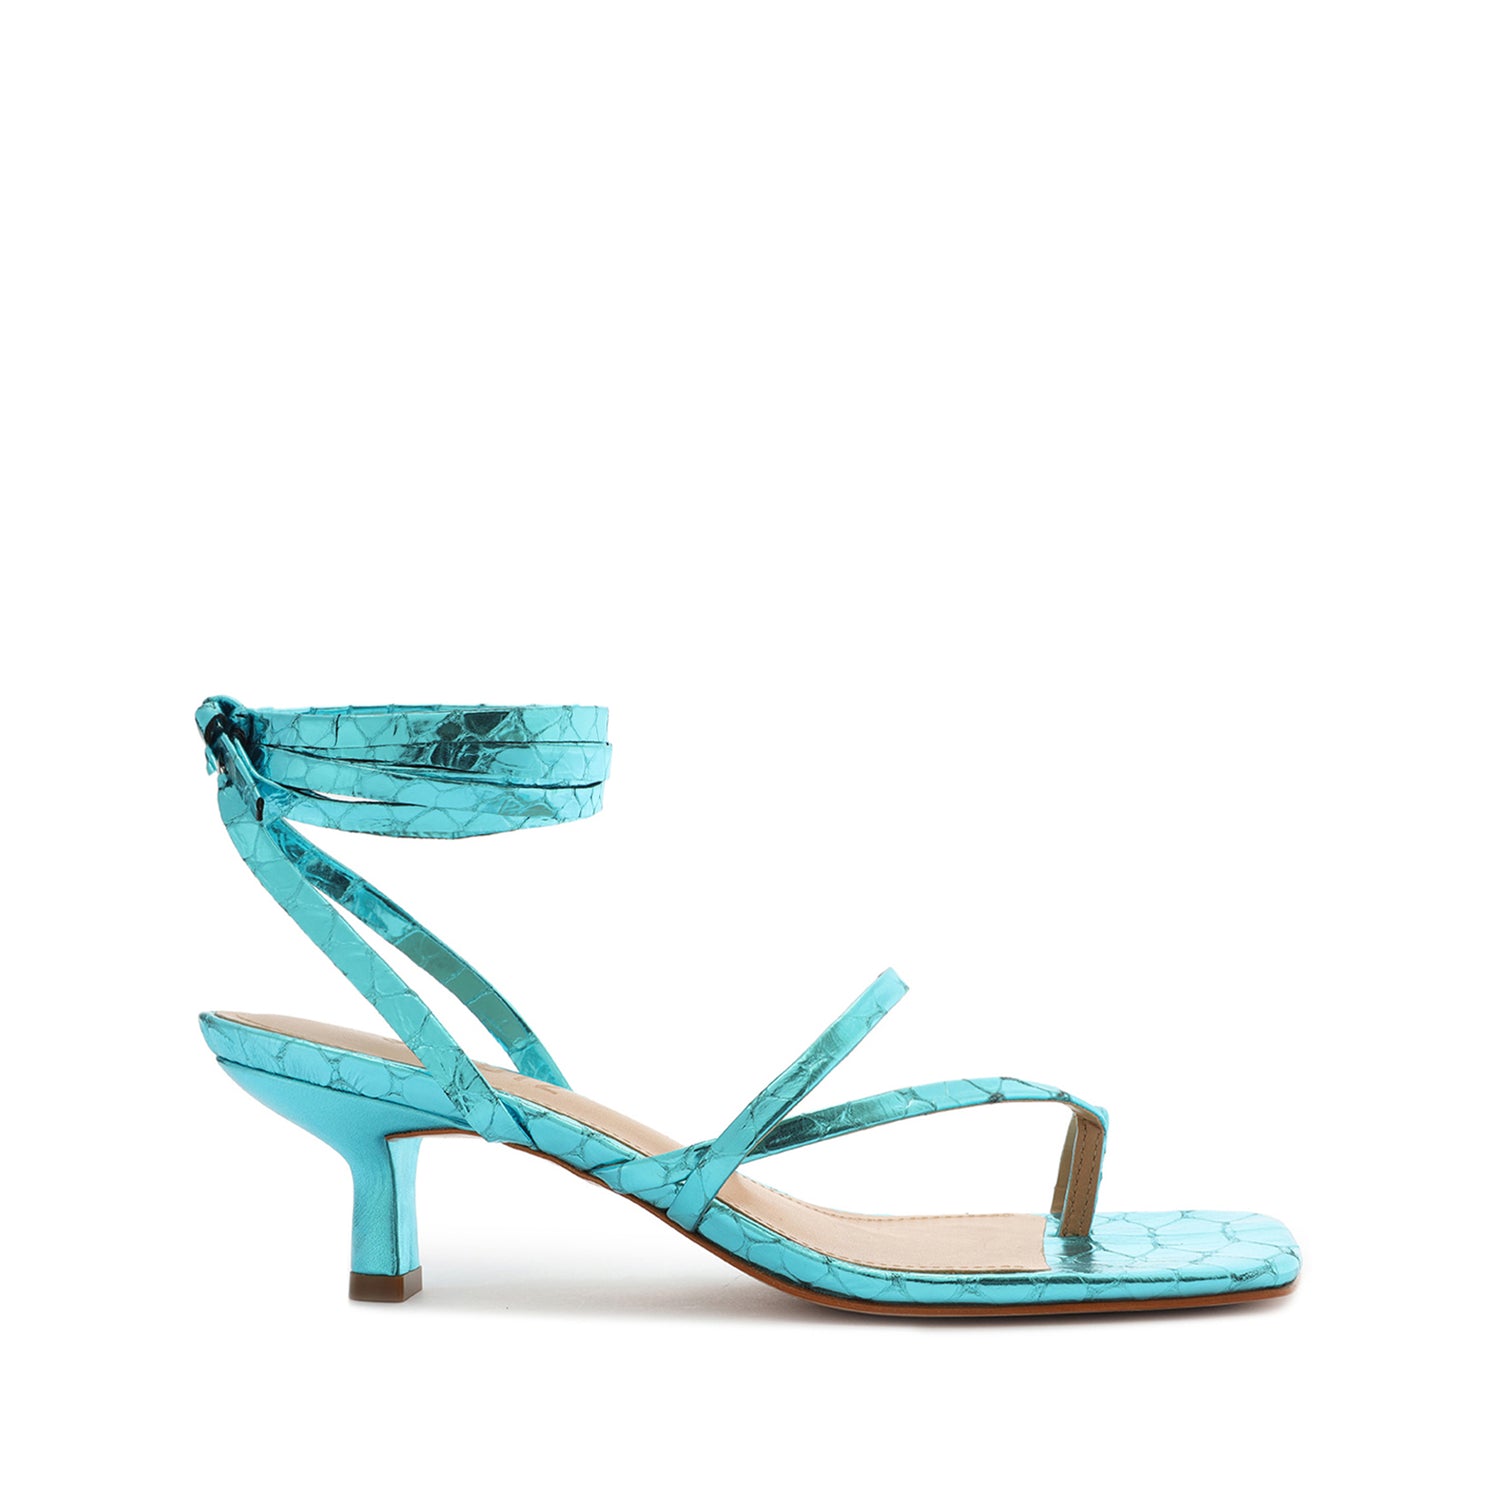 Lily Mid Metallic Sandal Sandals Sale 5 Turquoise Metallic Crocodile-Embossed Leather - Schutz Shoes